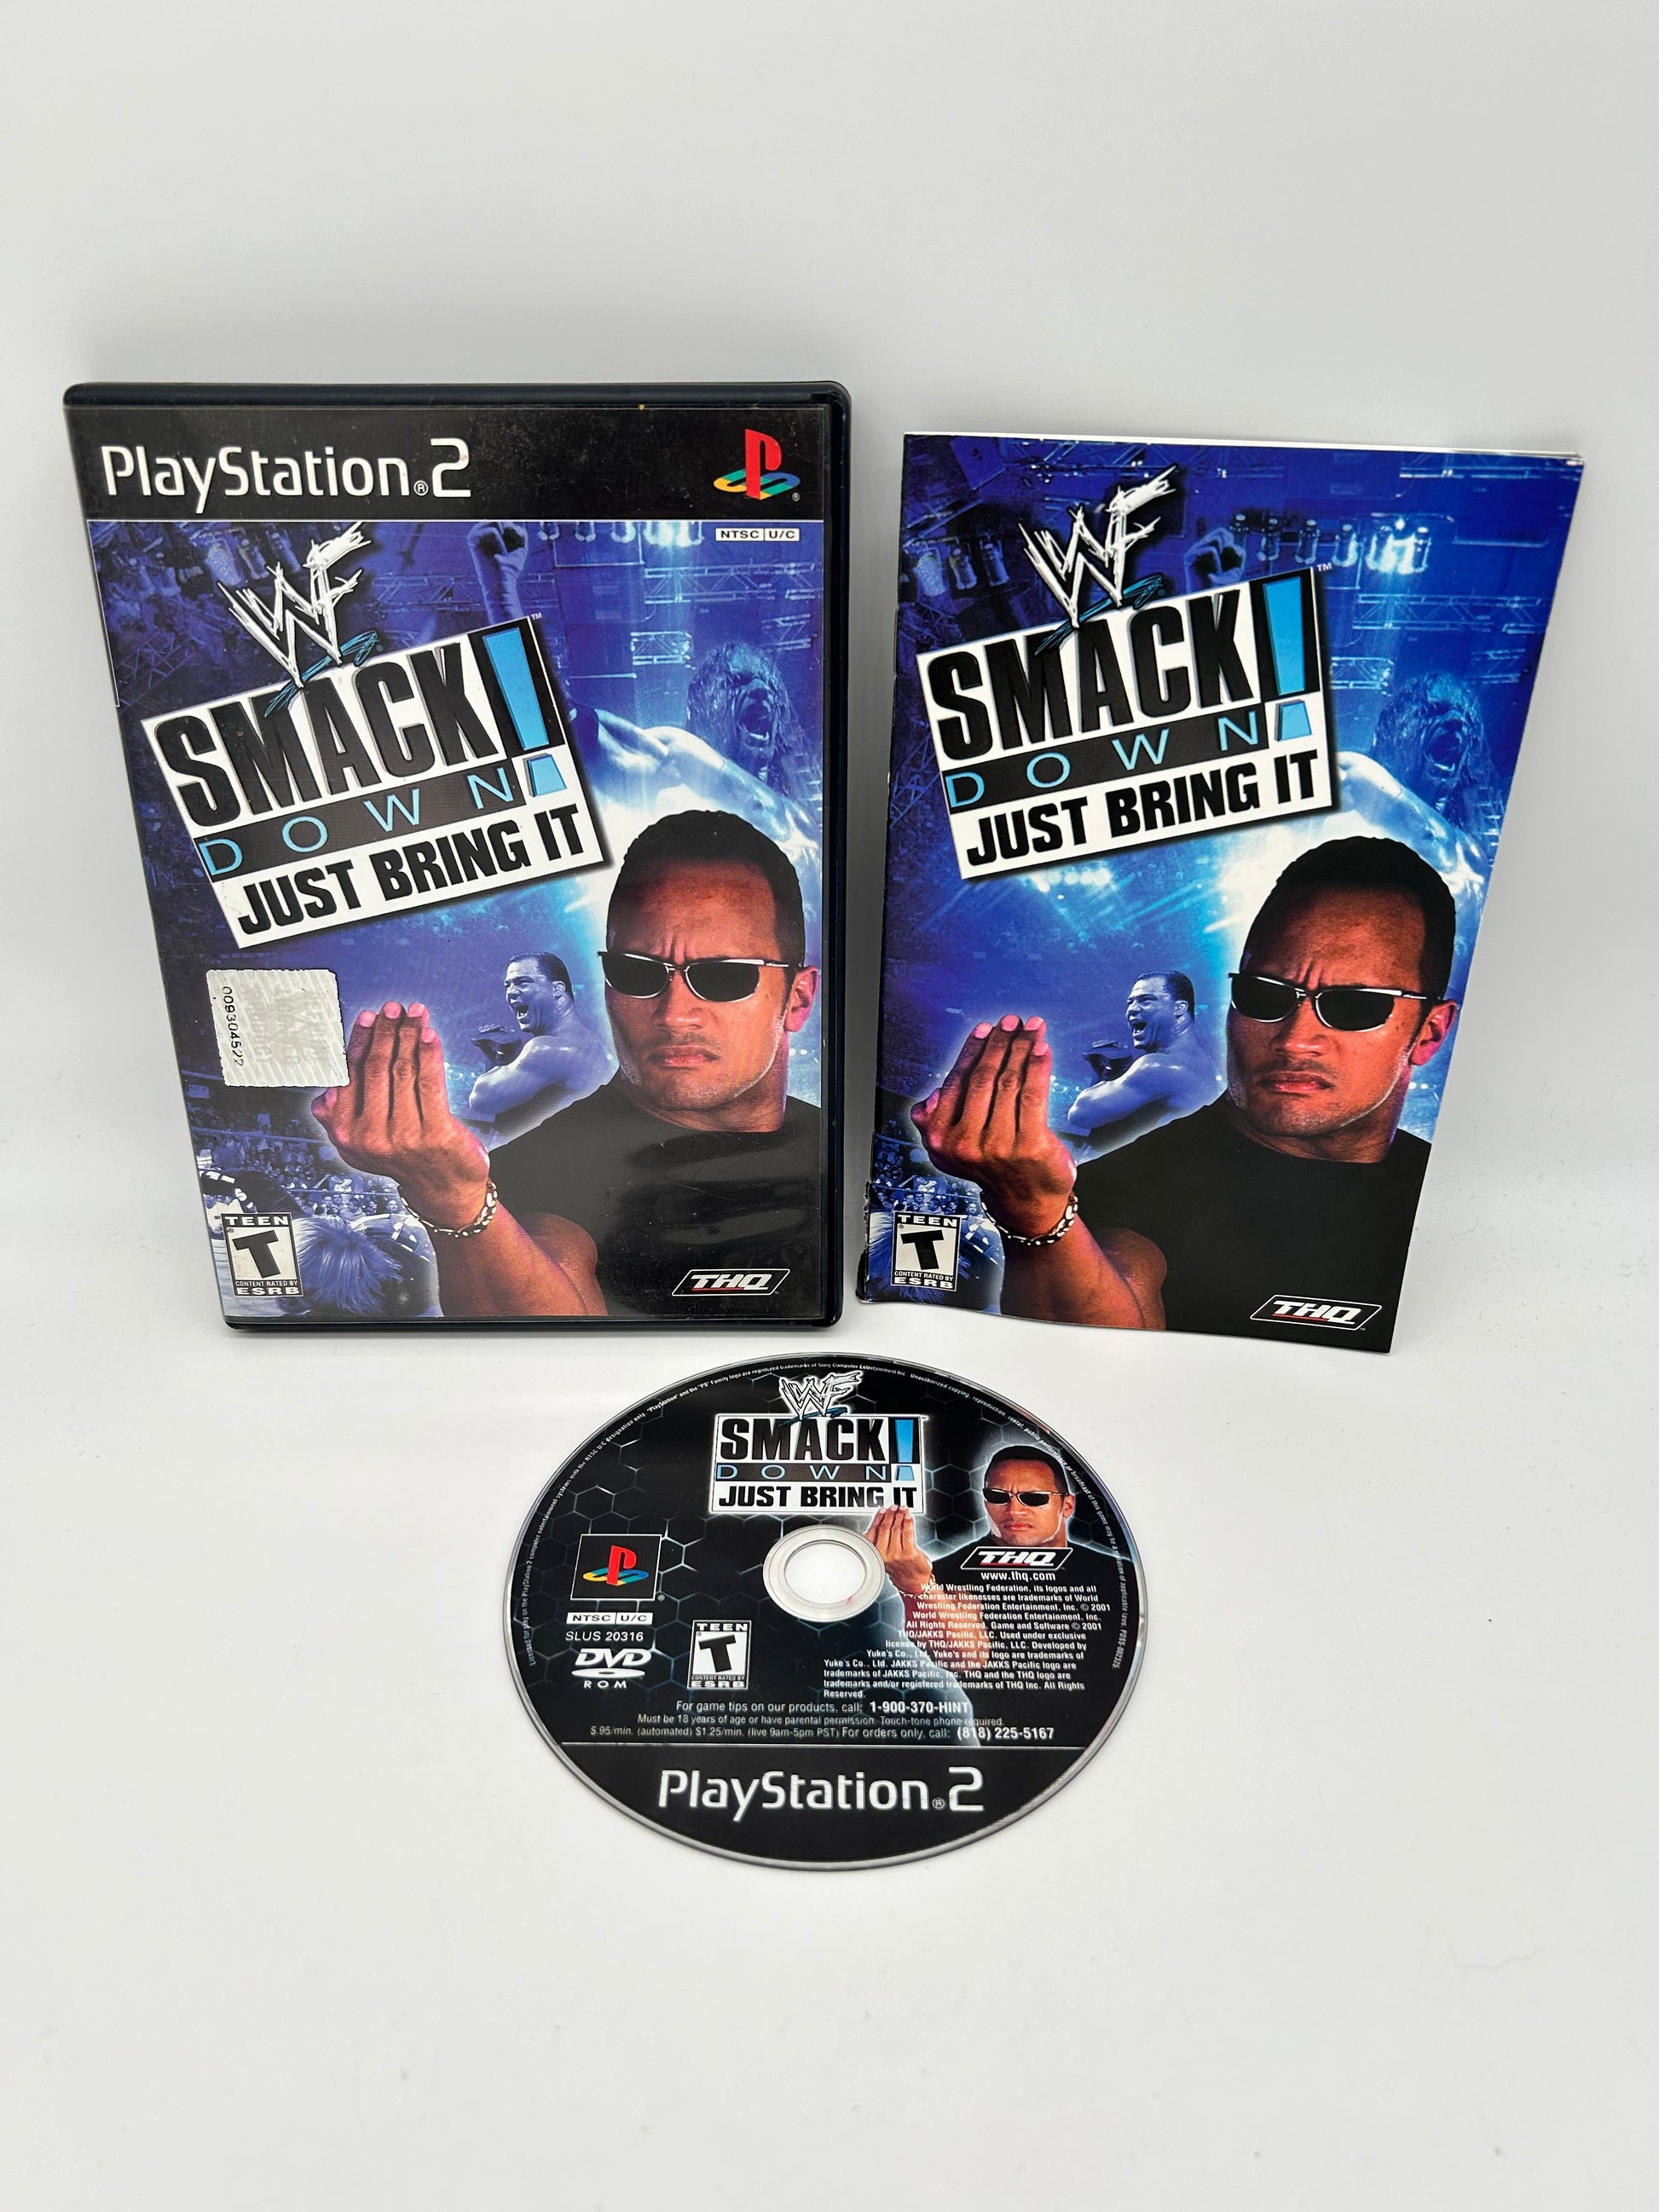 PiXEL-RETRO.COM : SONY PLAYSTATION 2 (PS2) COMPLET CIB BOX MANUAL GAME NTSC WWF SMACKDOWN JUST BRING IT